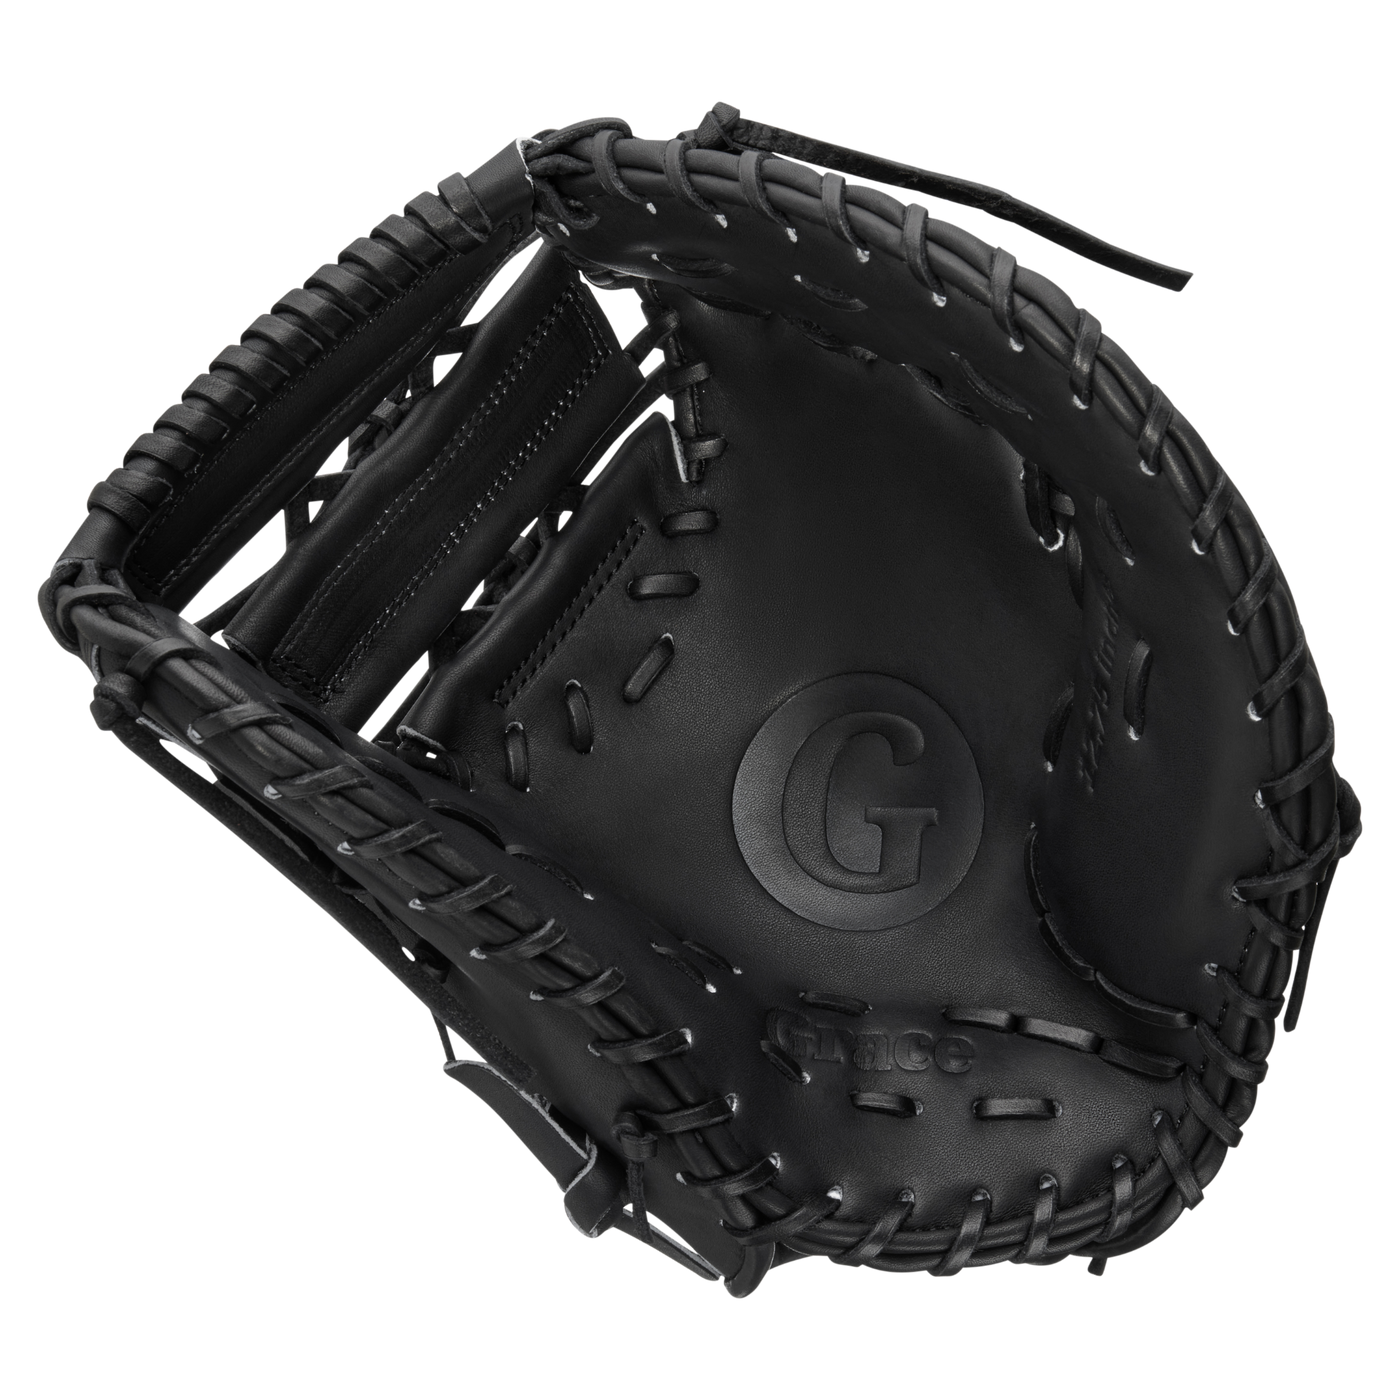 12.75" Dual-X Web First Base Grace Glove